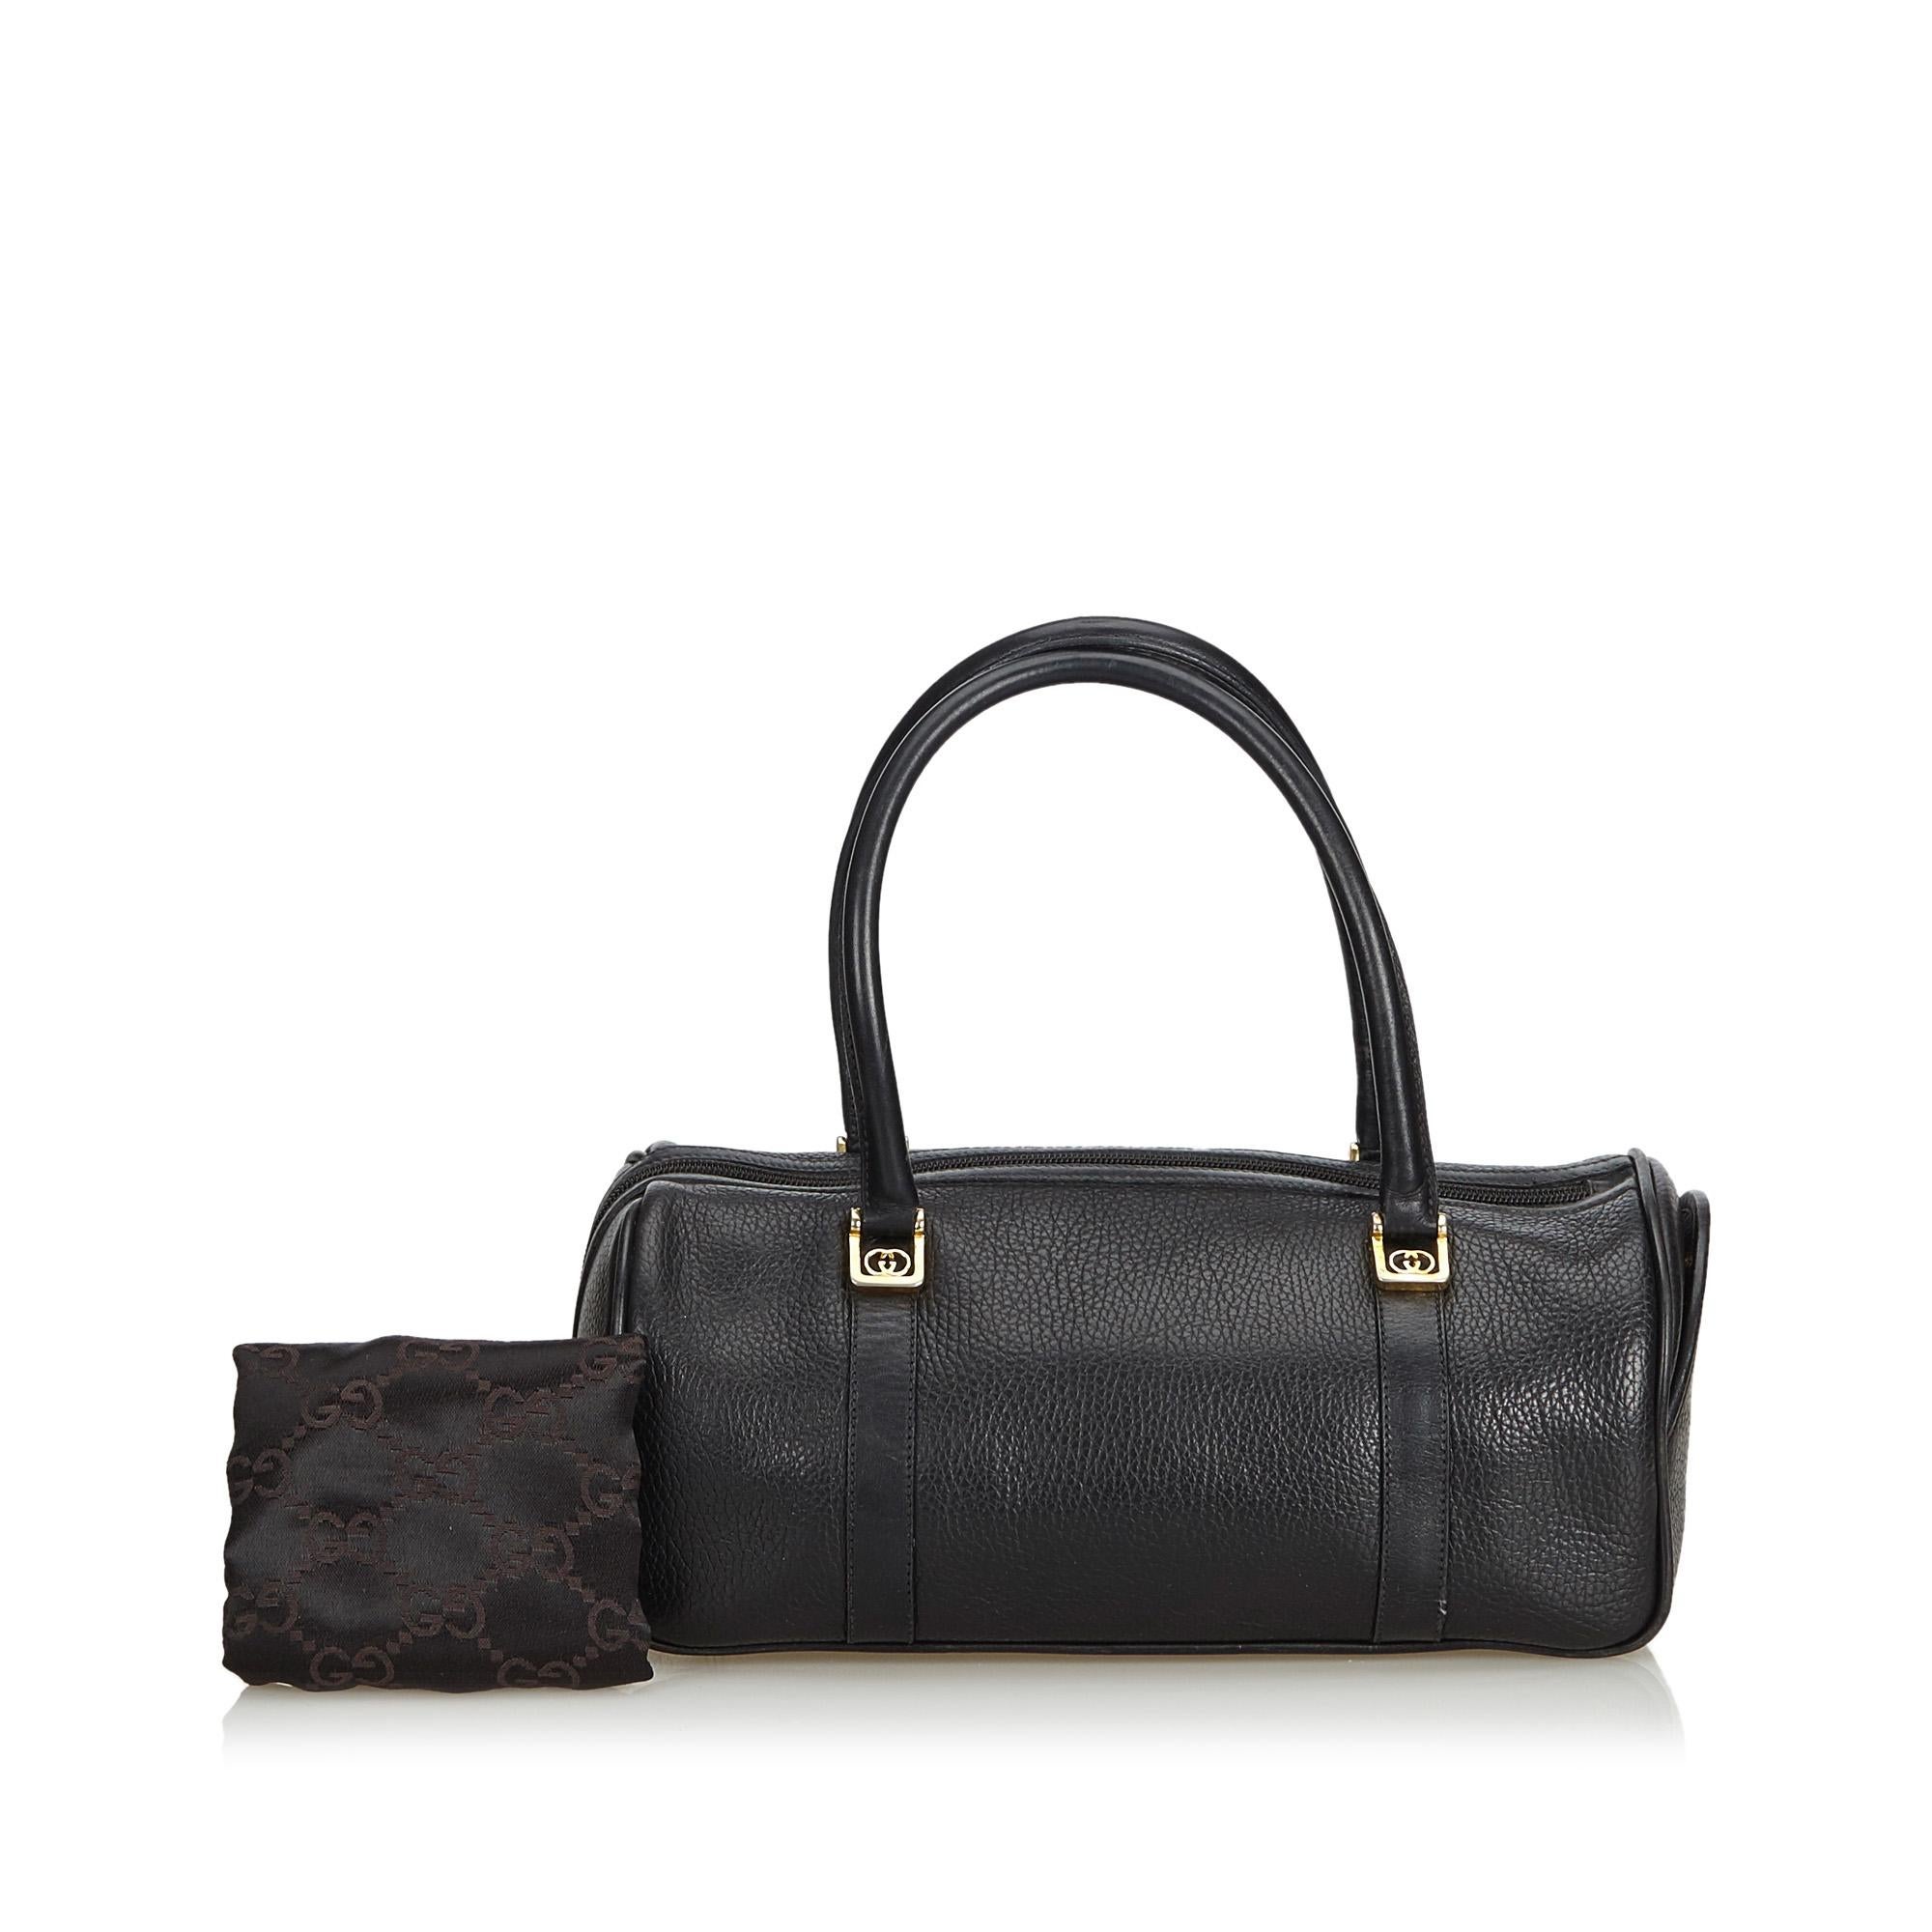 Gucci Black Leather Handbag For Sale 6